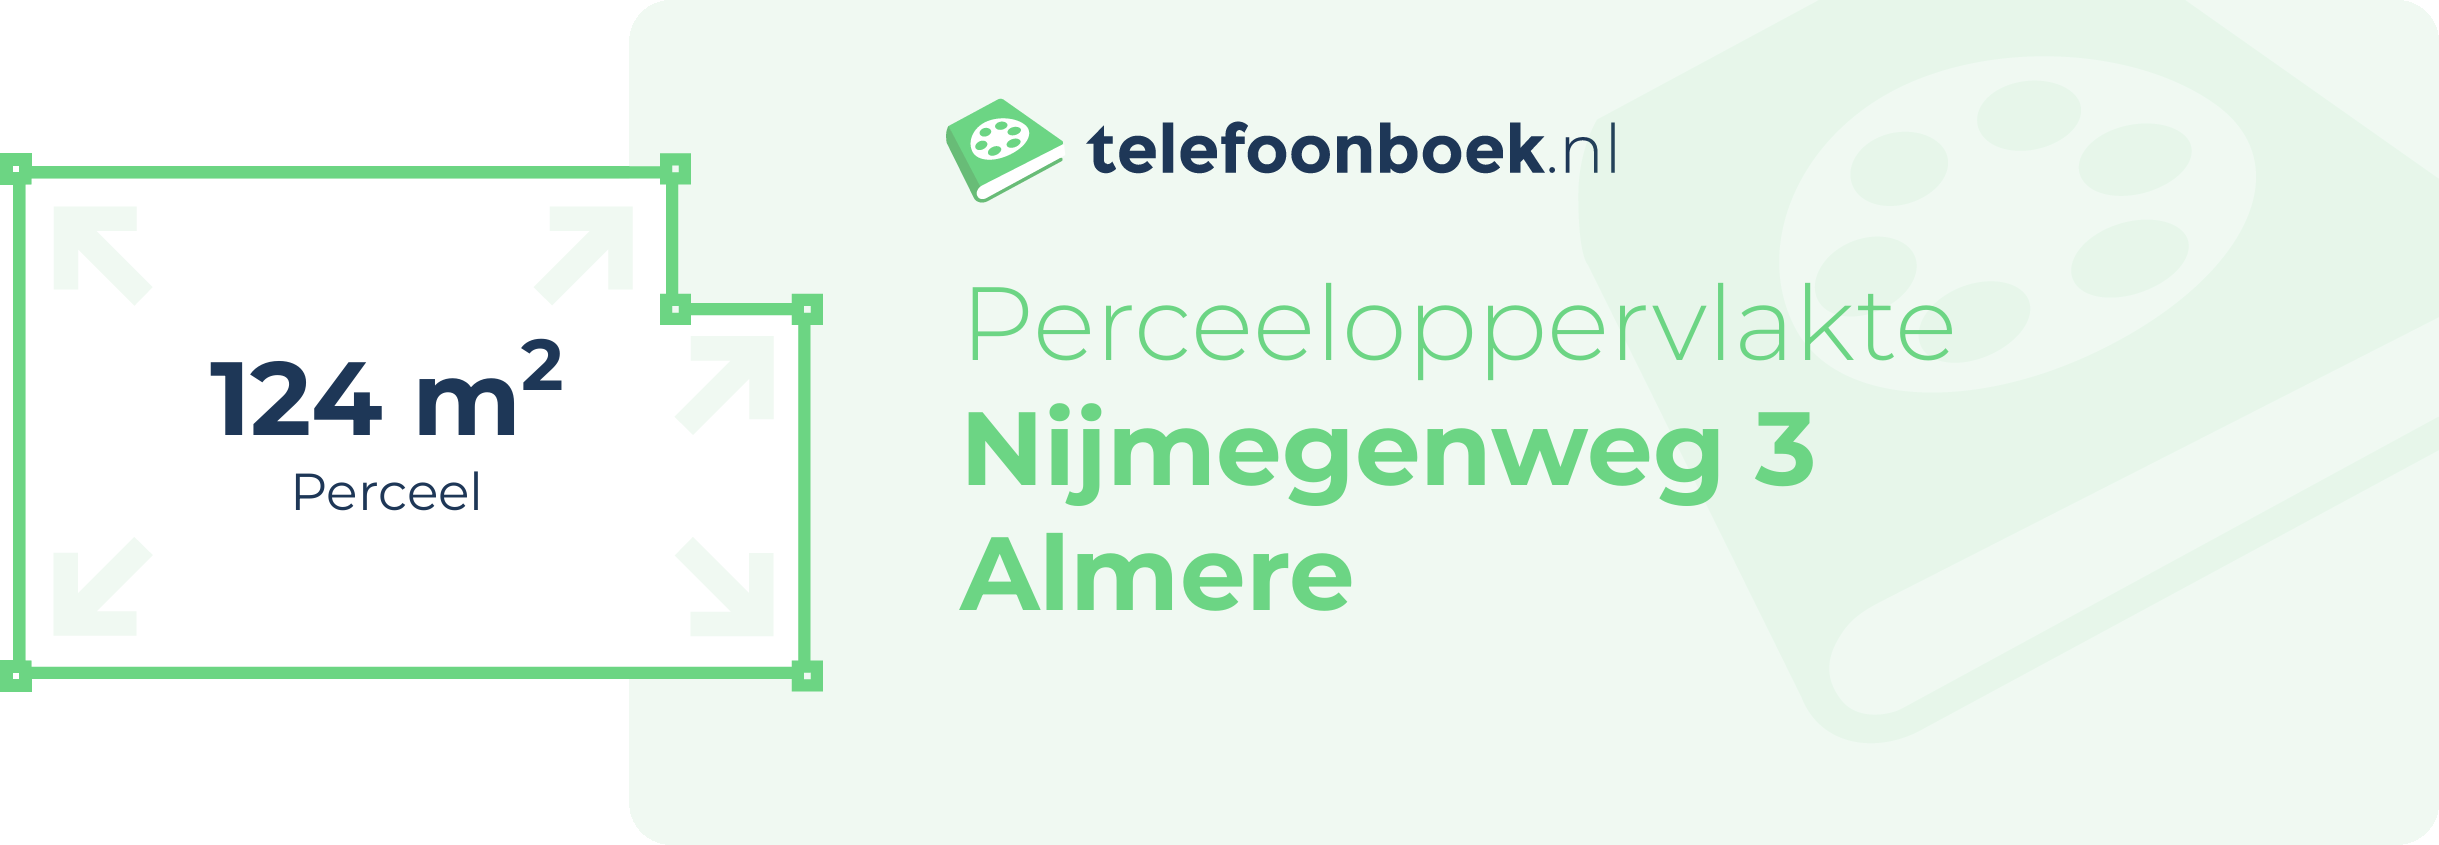 Perceeloppervlakte Nijmegenweg 3 Almere